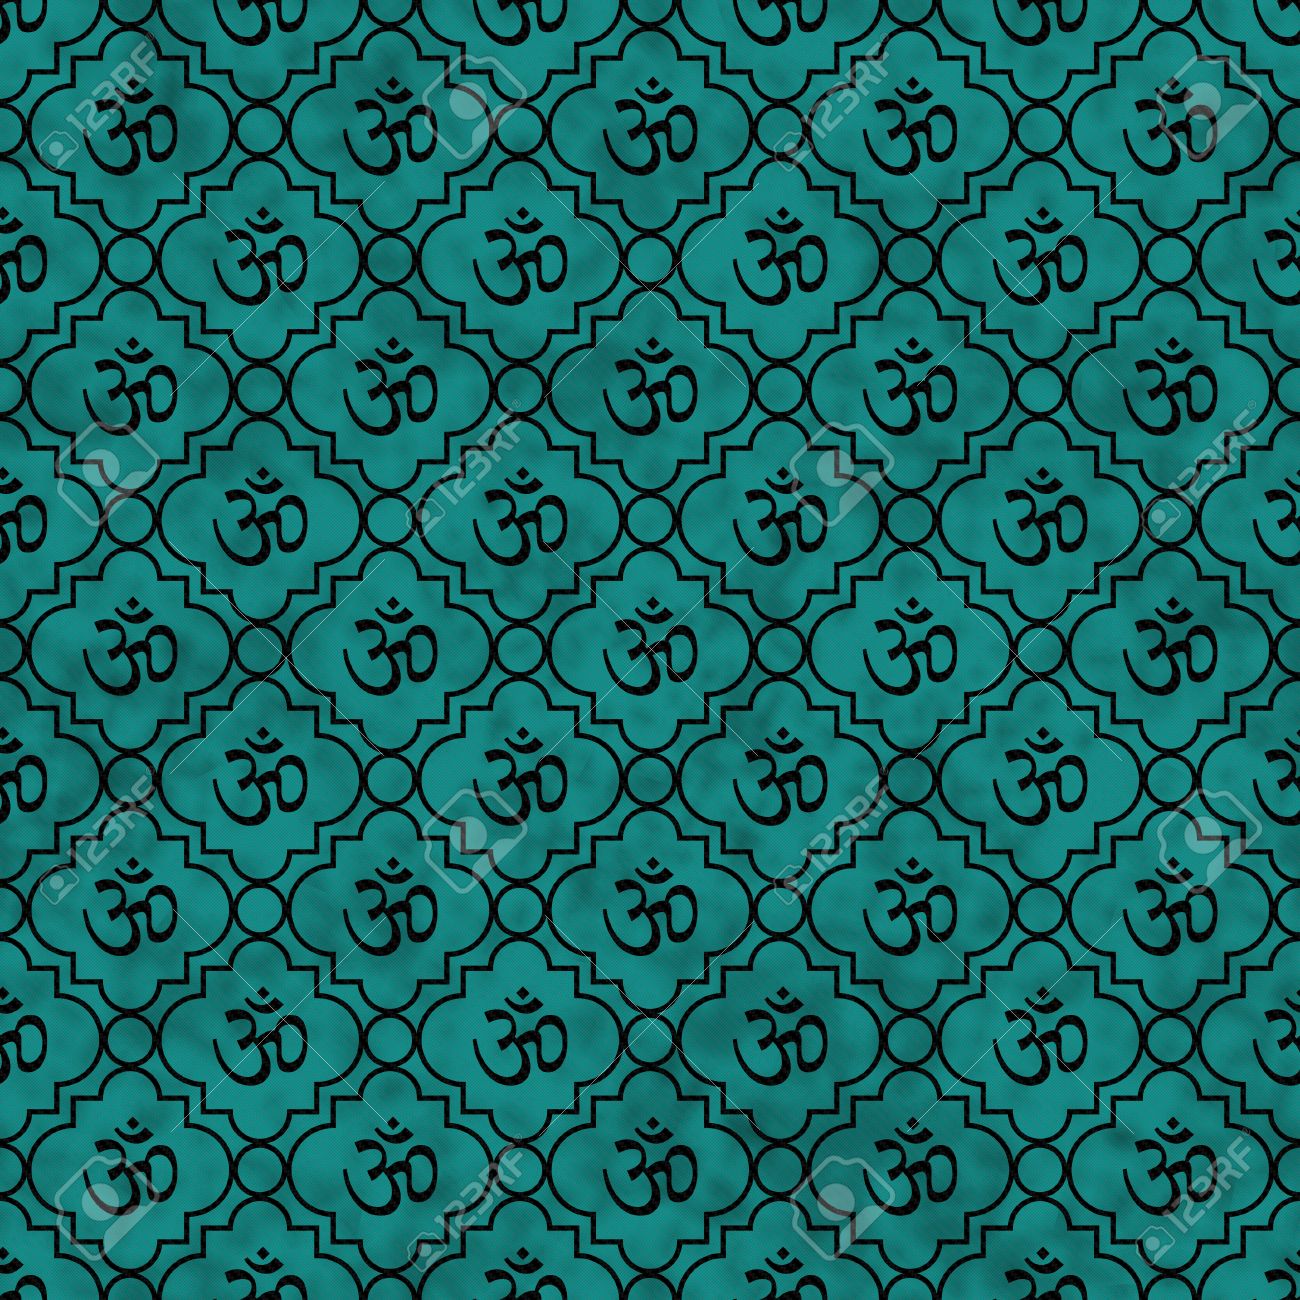 Teal And Black Aum Hindu Symbol Tile Pattern Repeat Background